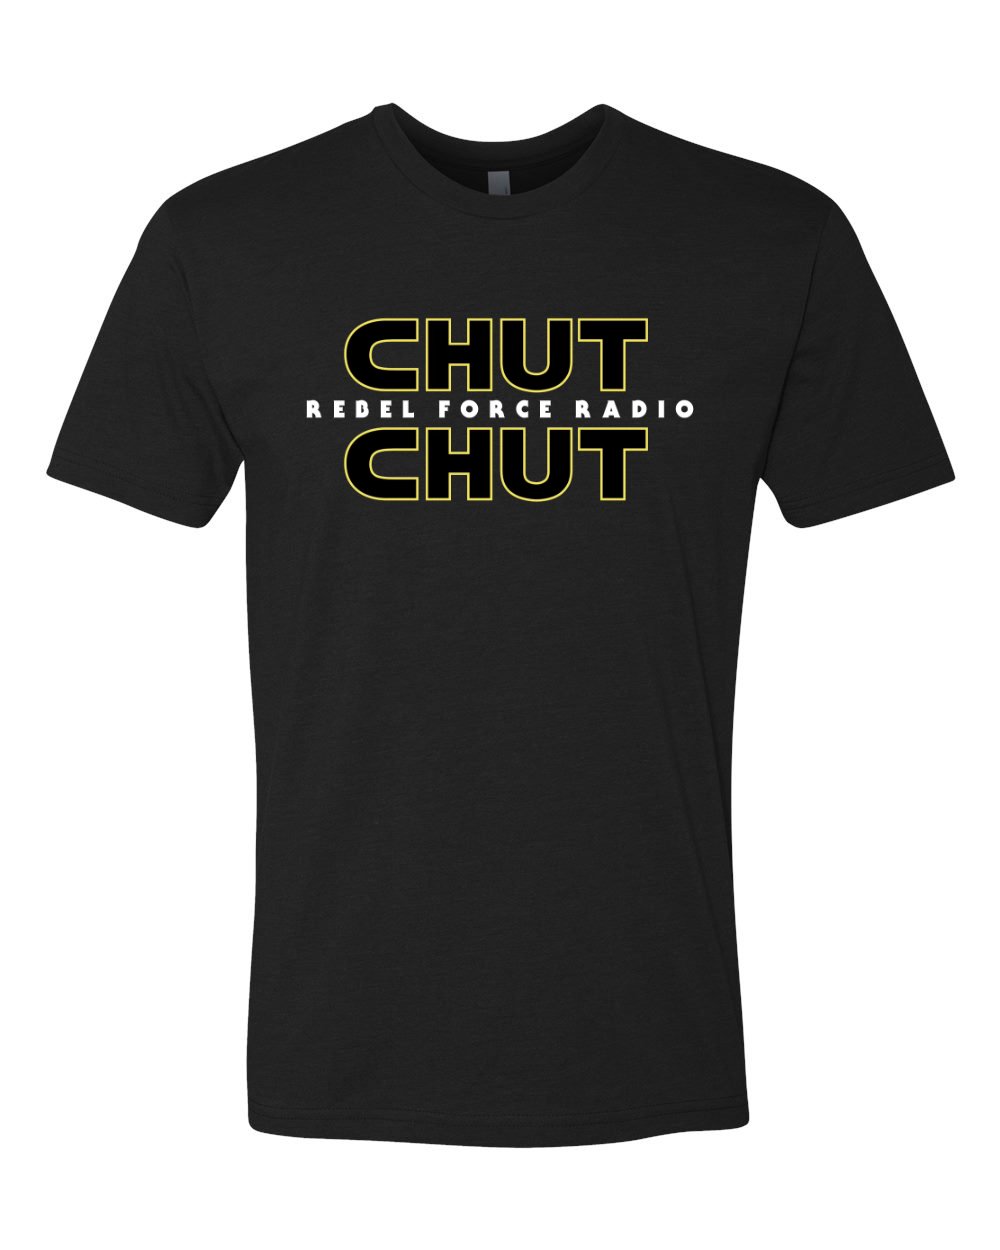 RFR Shirt Chut Chut Storm Black.jpg